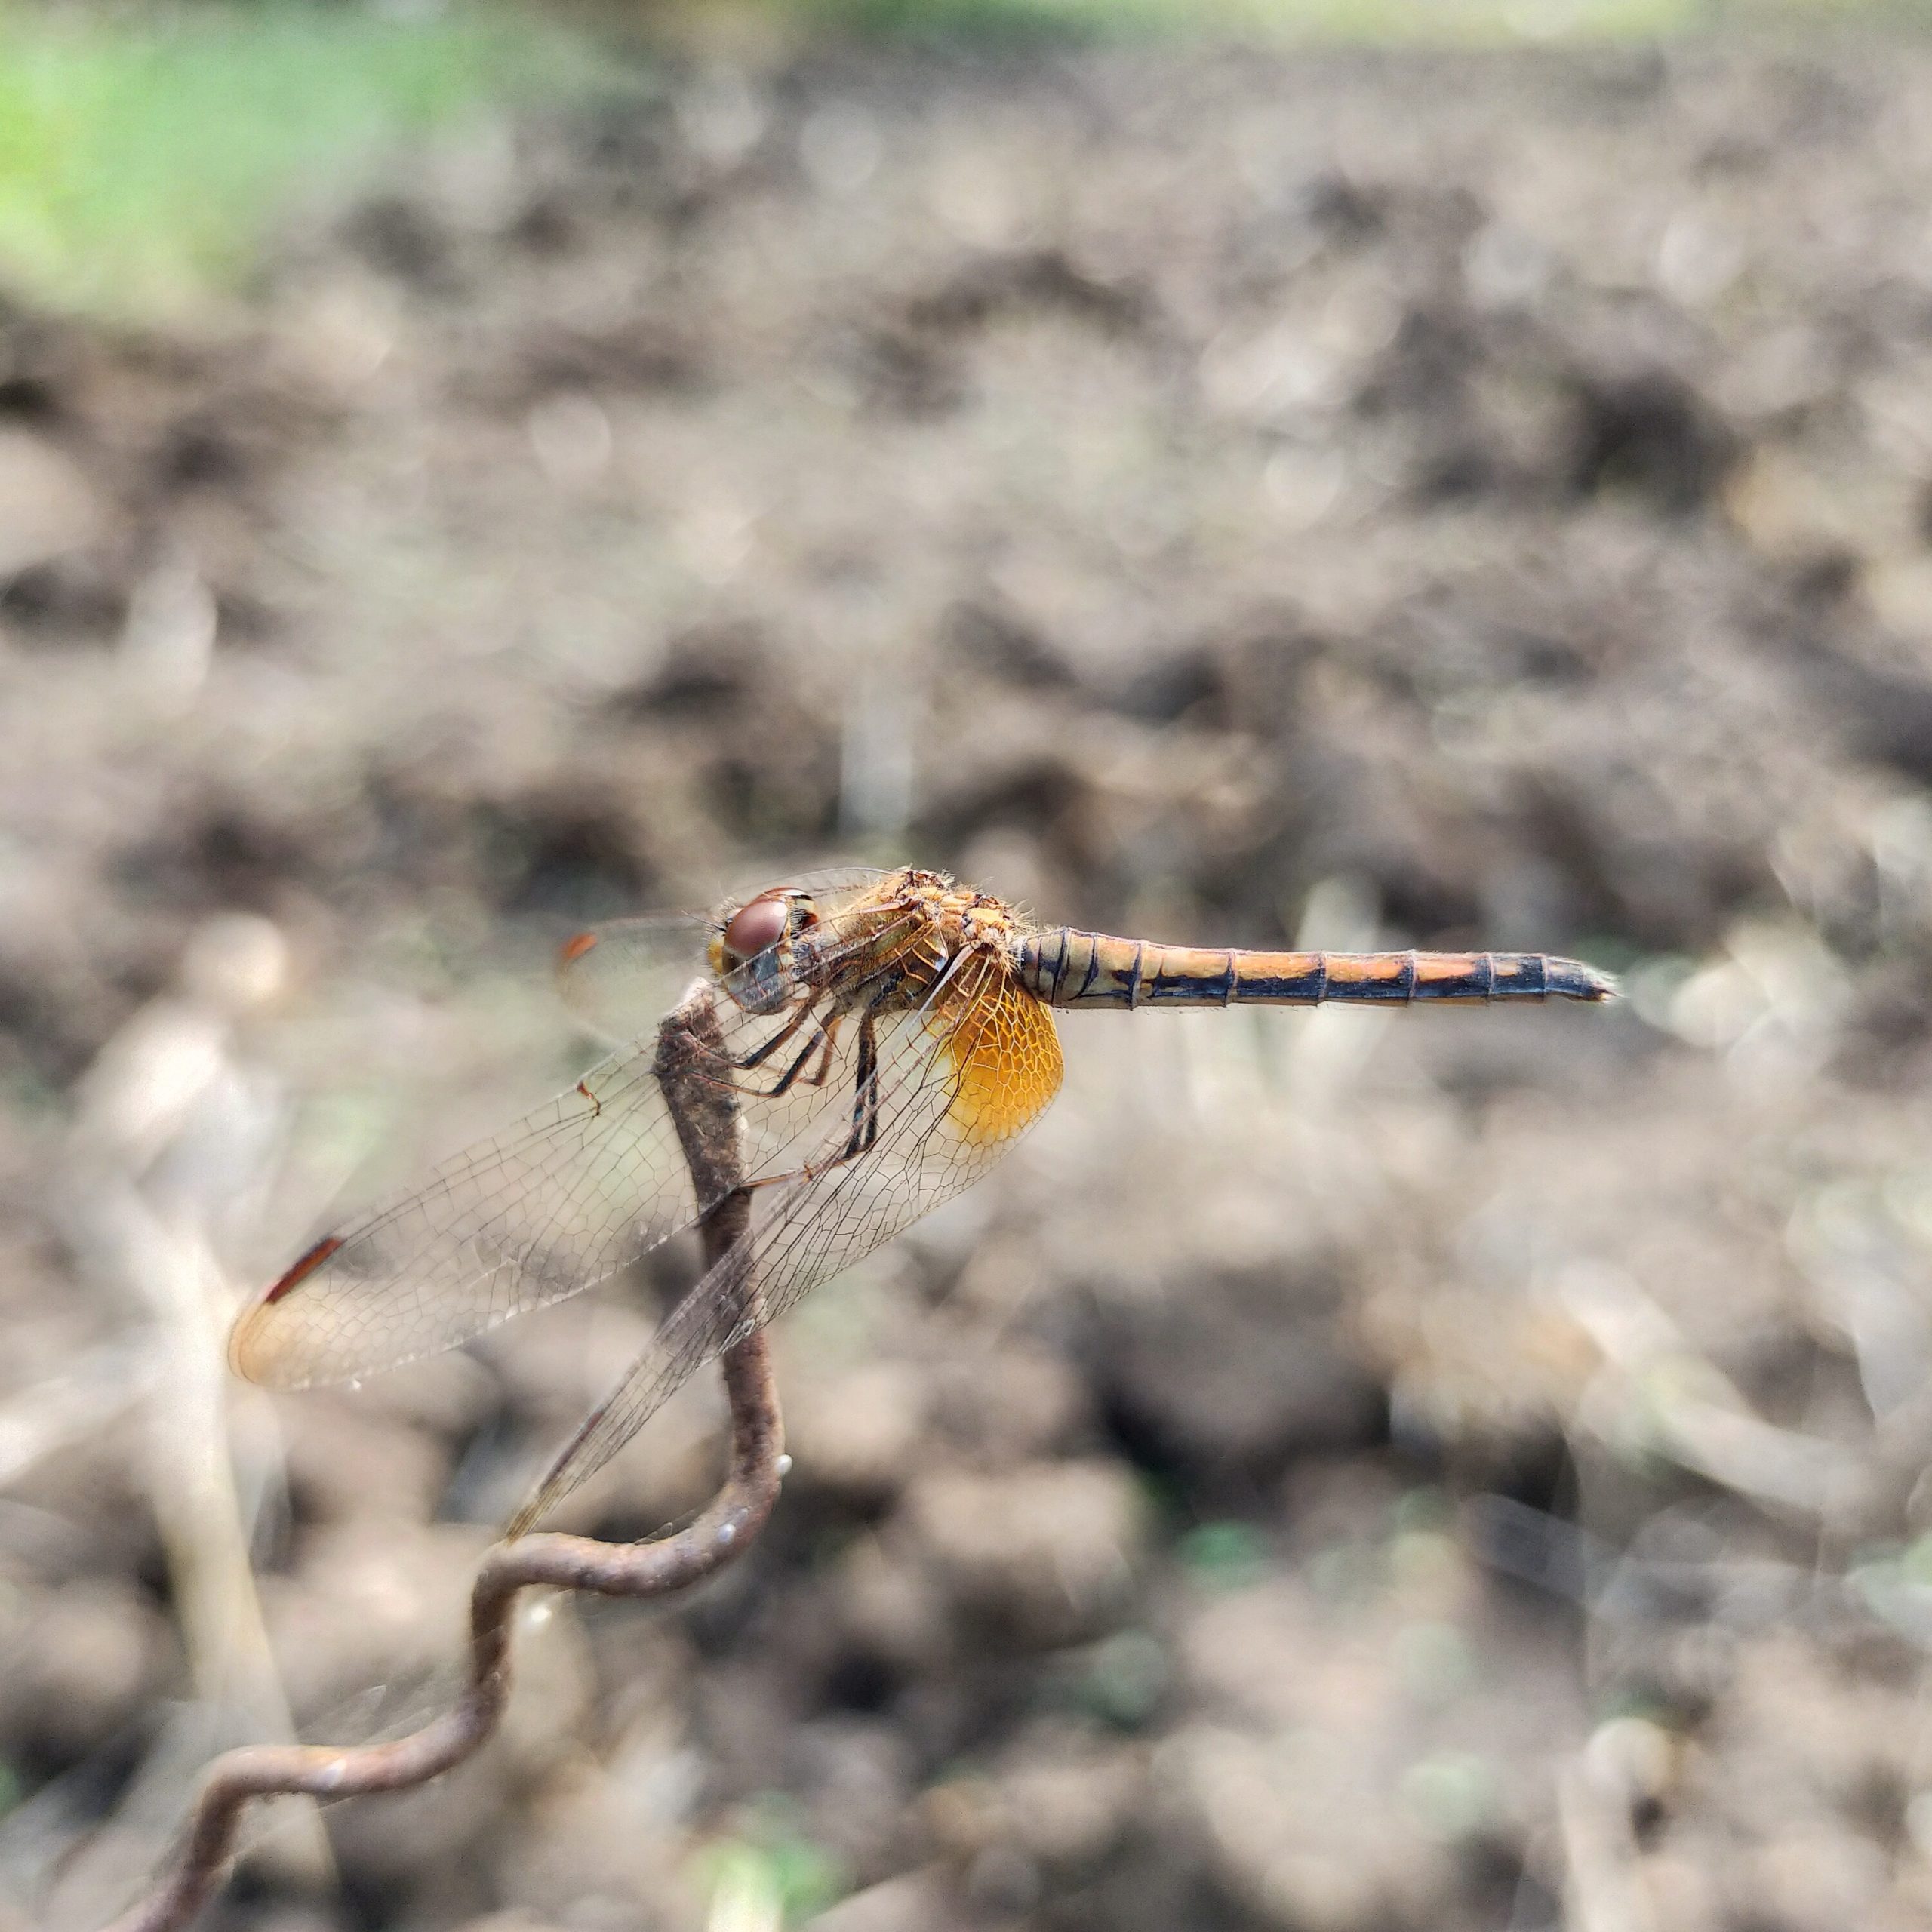 A dragon fly on plant stem